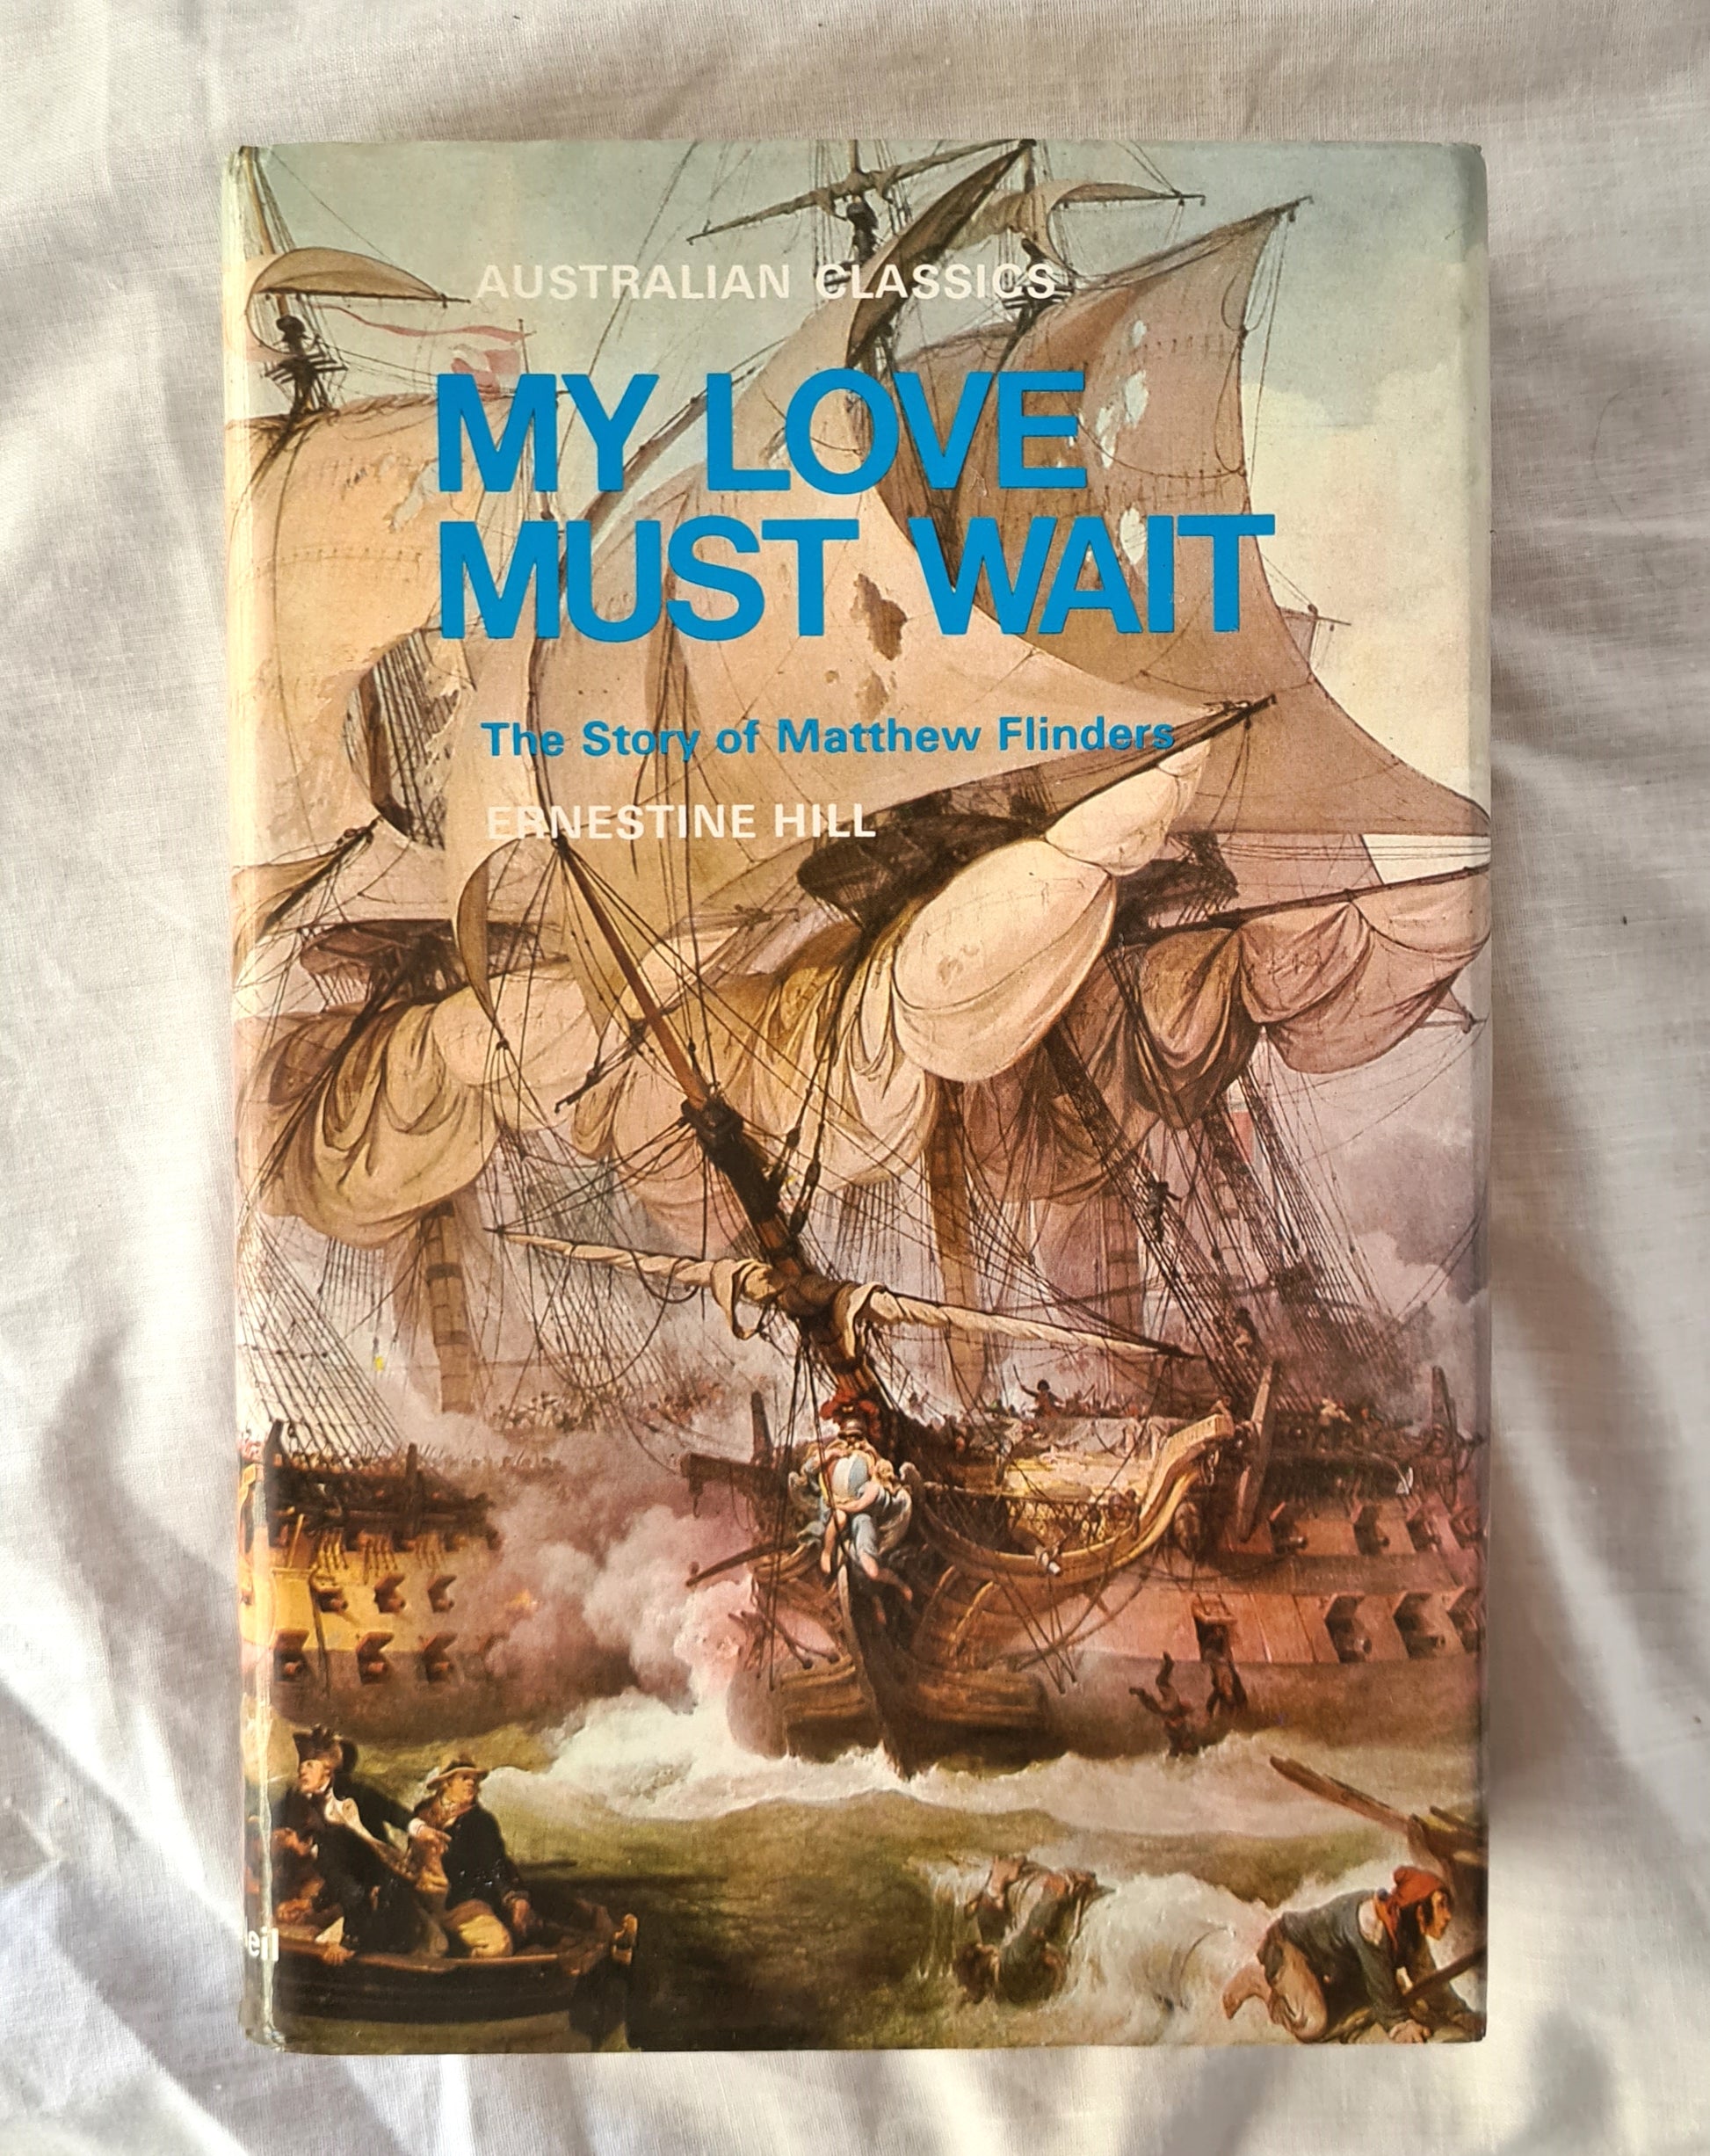 My Love Must Wait  The Story of Matthew Flinders  by Ernestine Hill  (Australian Classics)